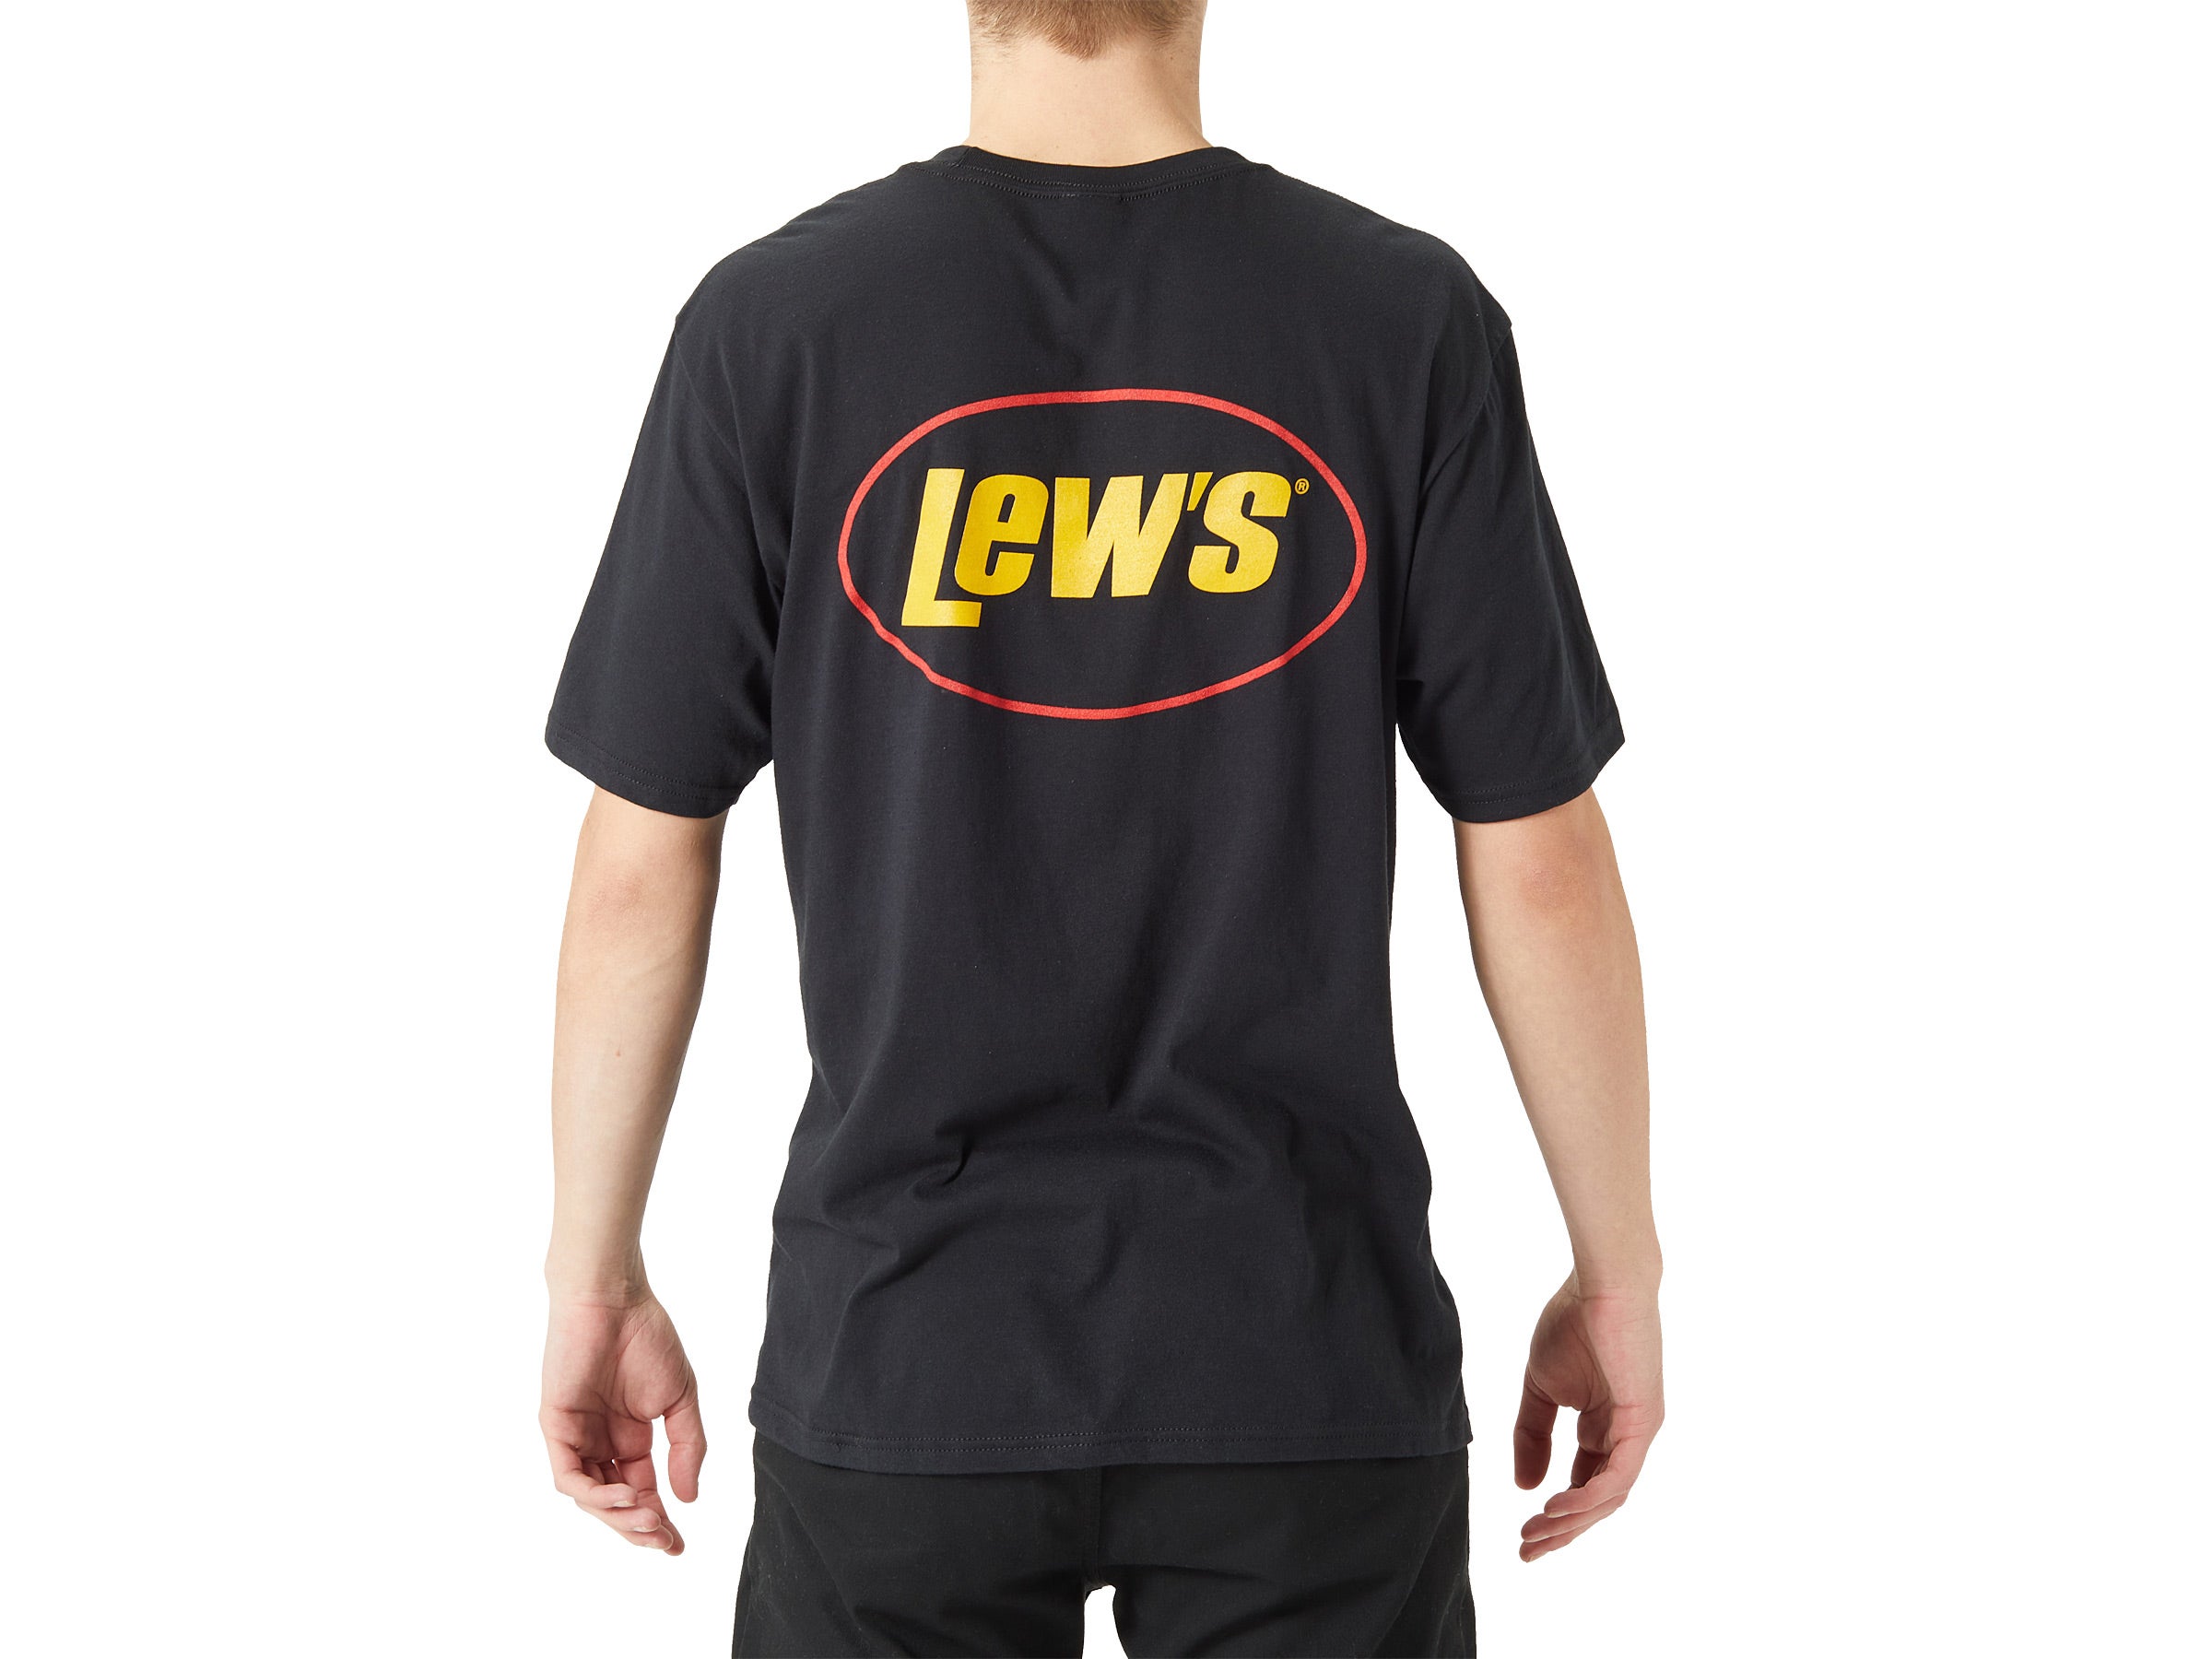 Lew's Lews Black X-Large Micro Fiber Shirt NEW FREE US Shipping 